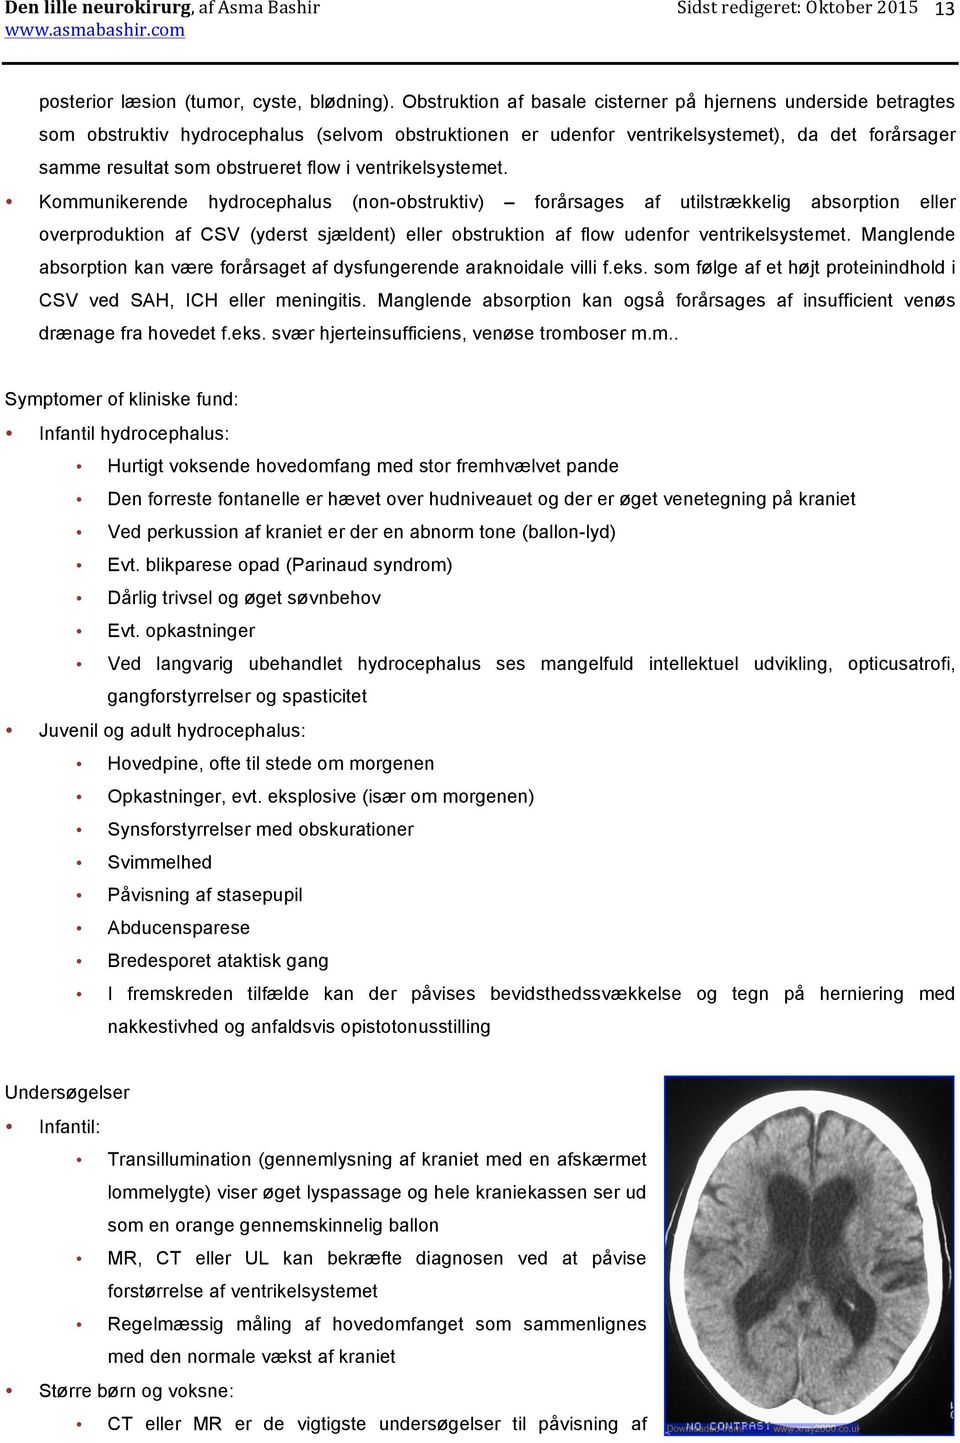 Den lille Neurokirurg - PDF Gratis download